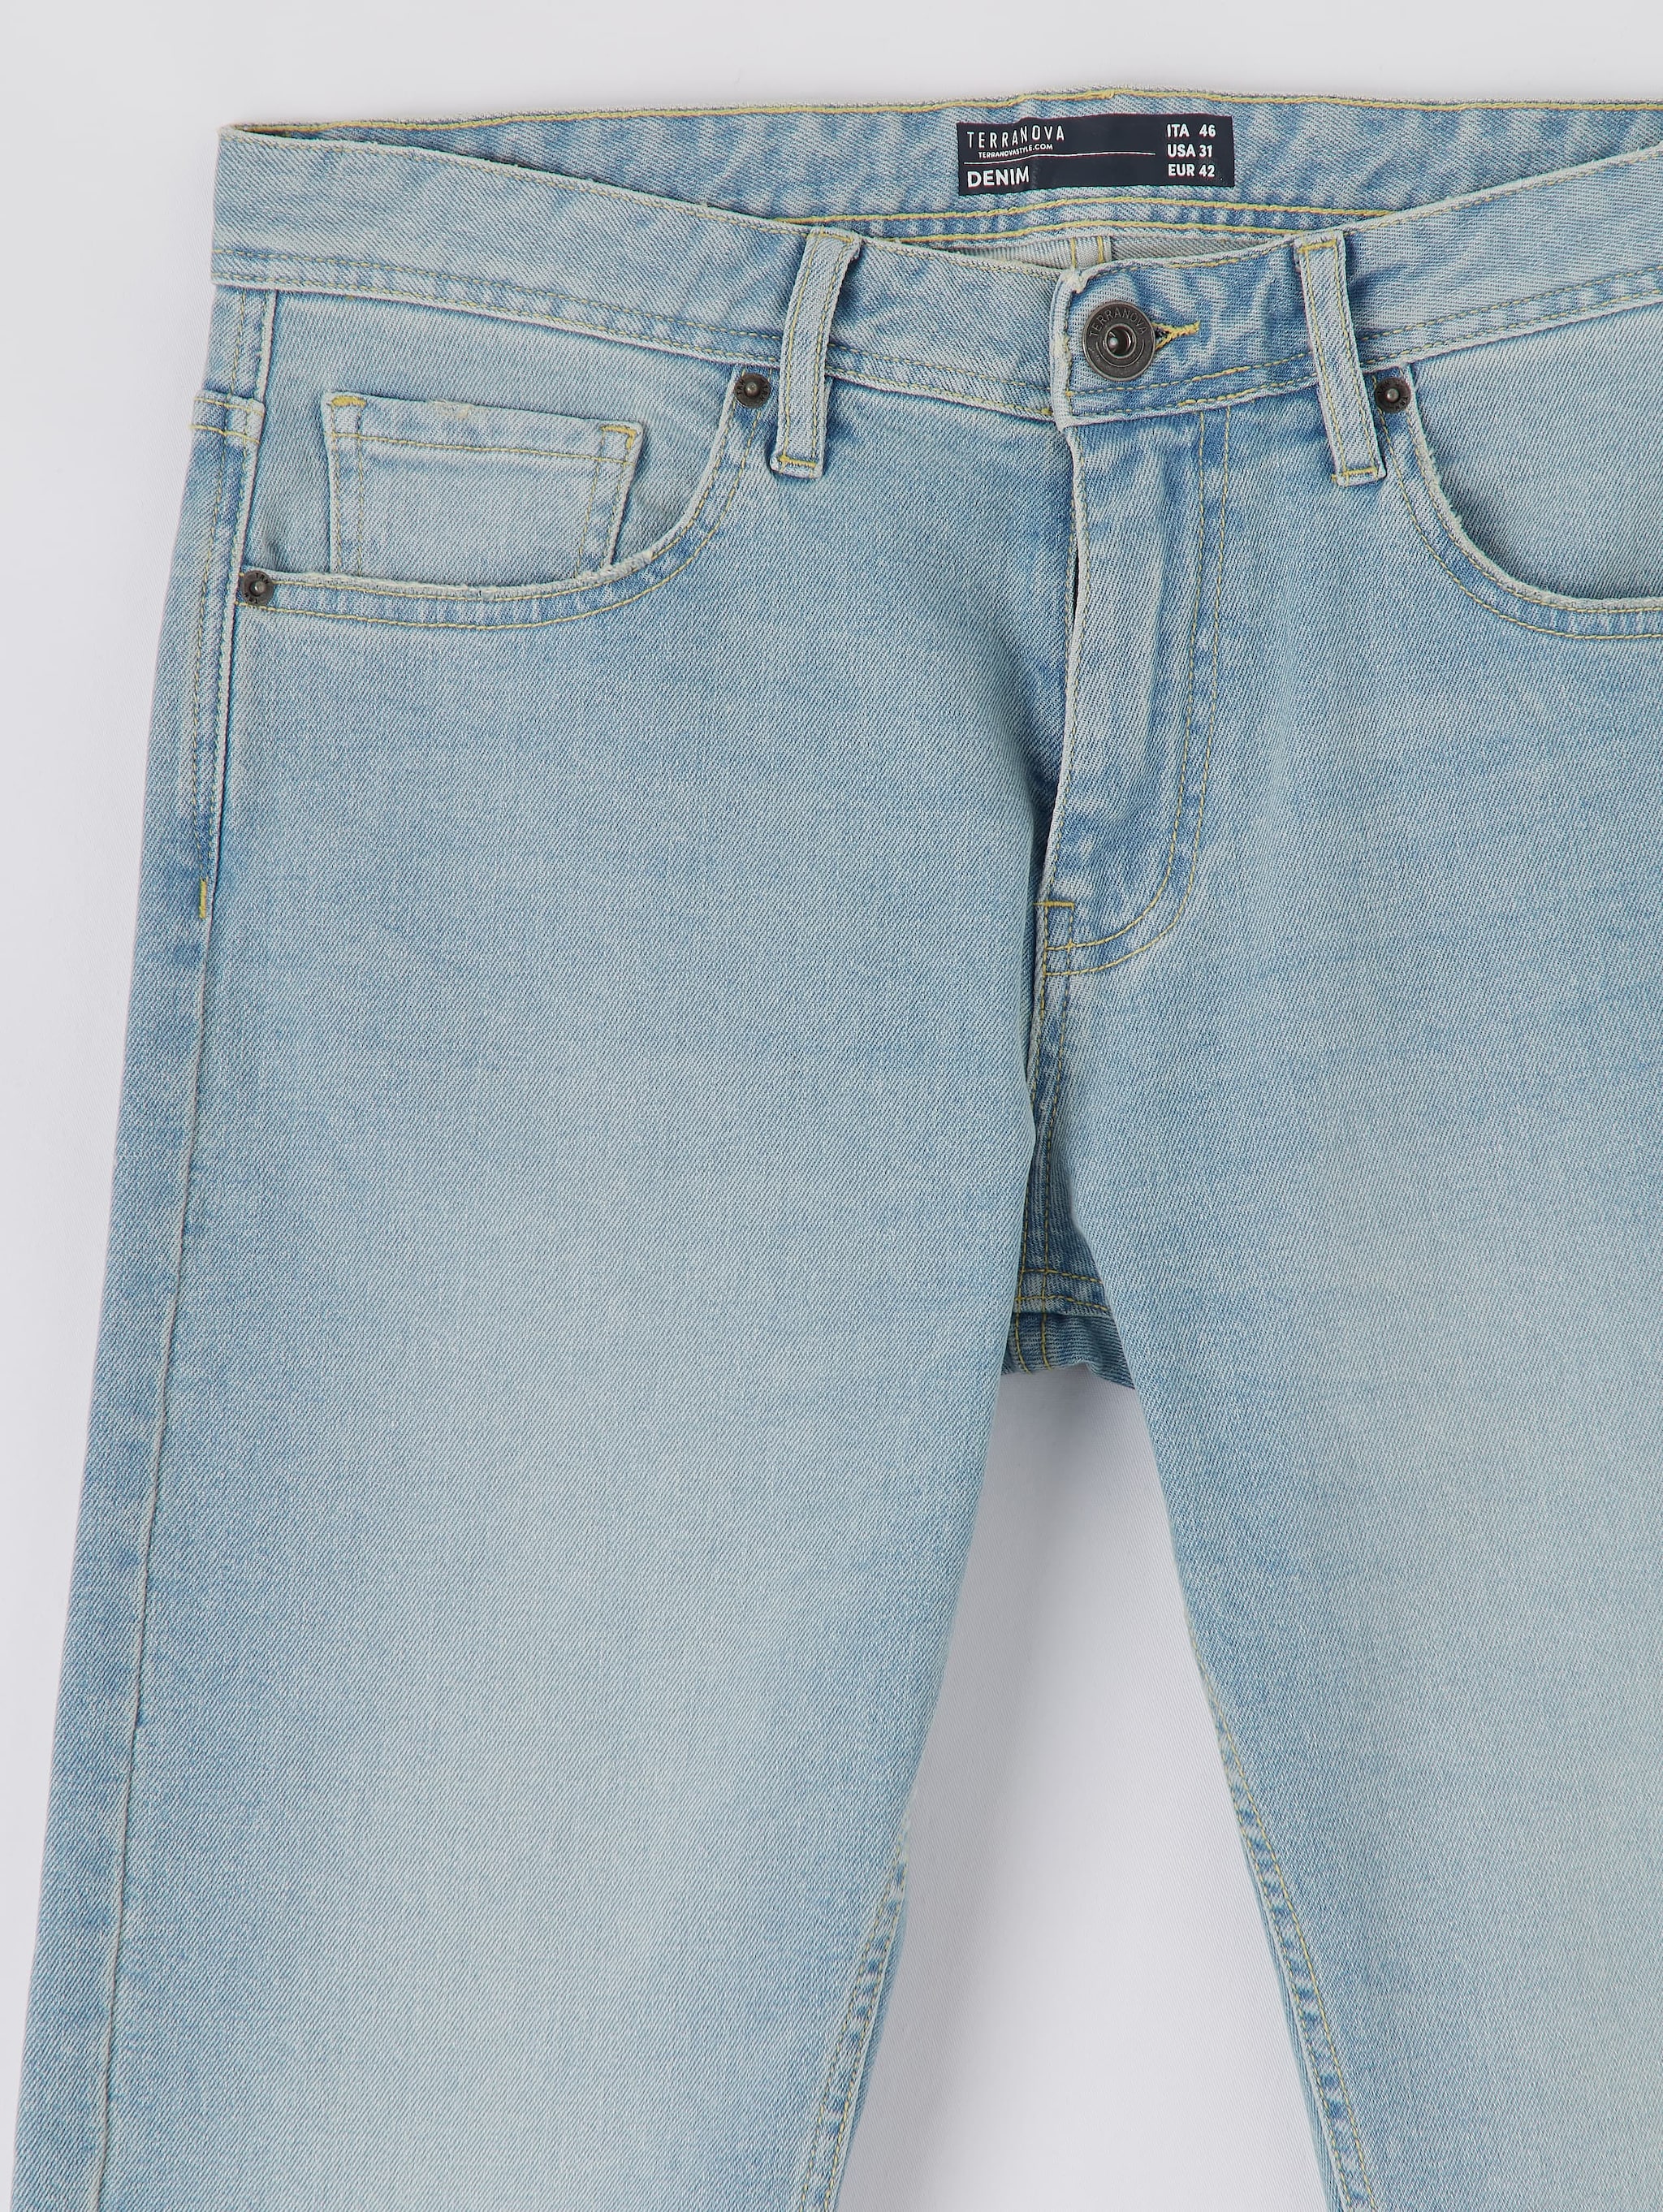 jeans buy online